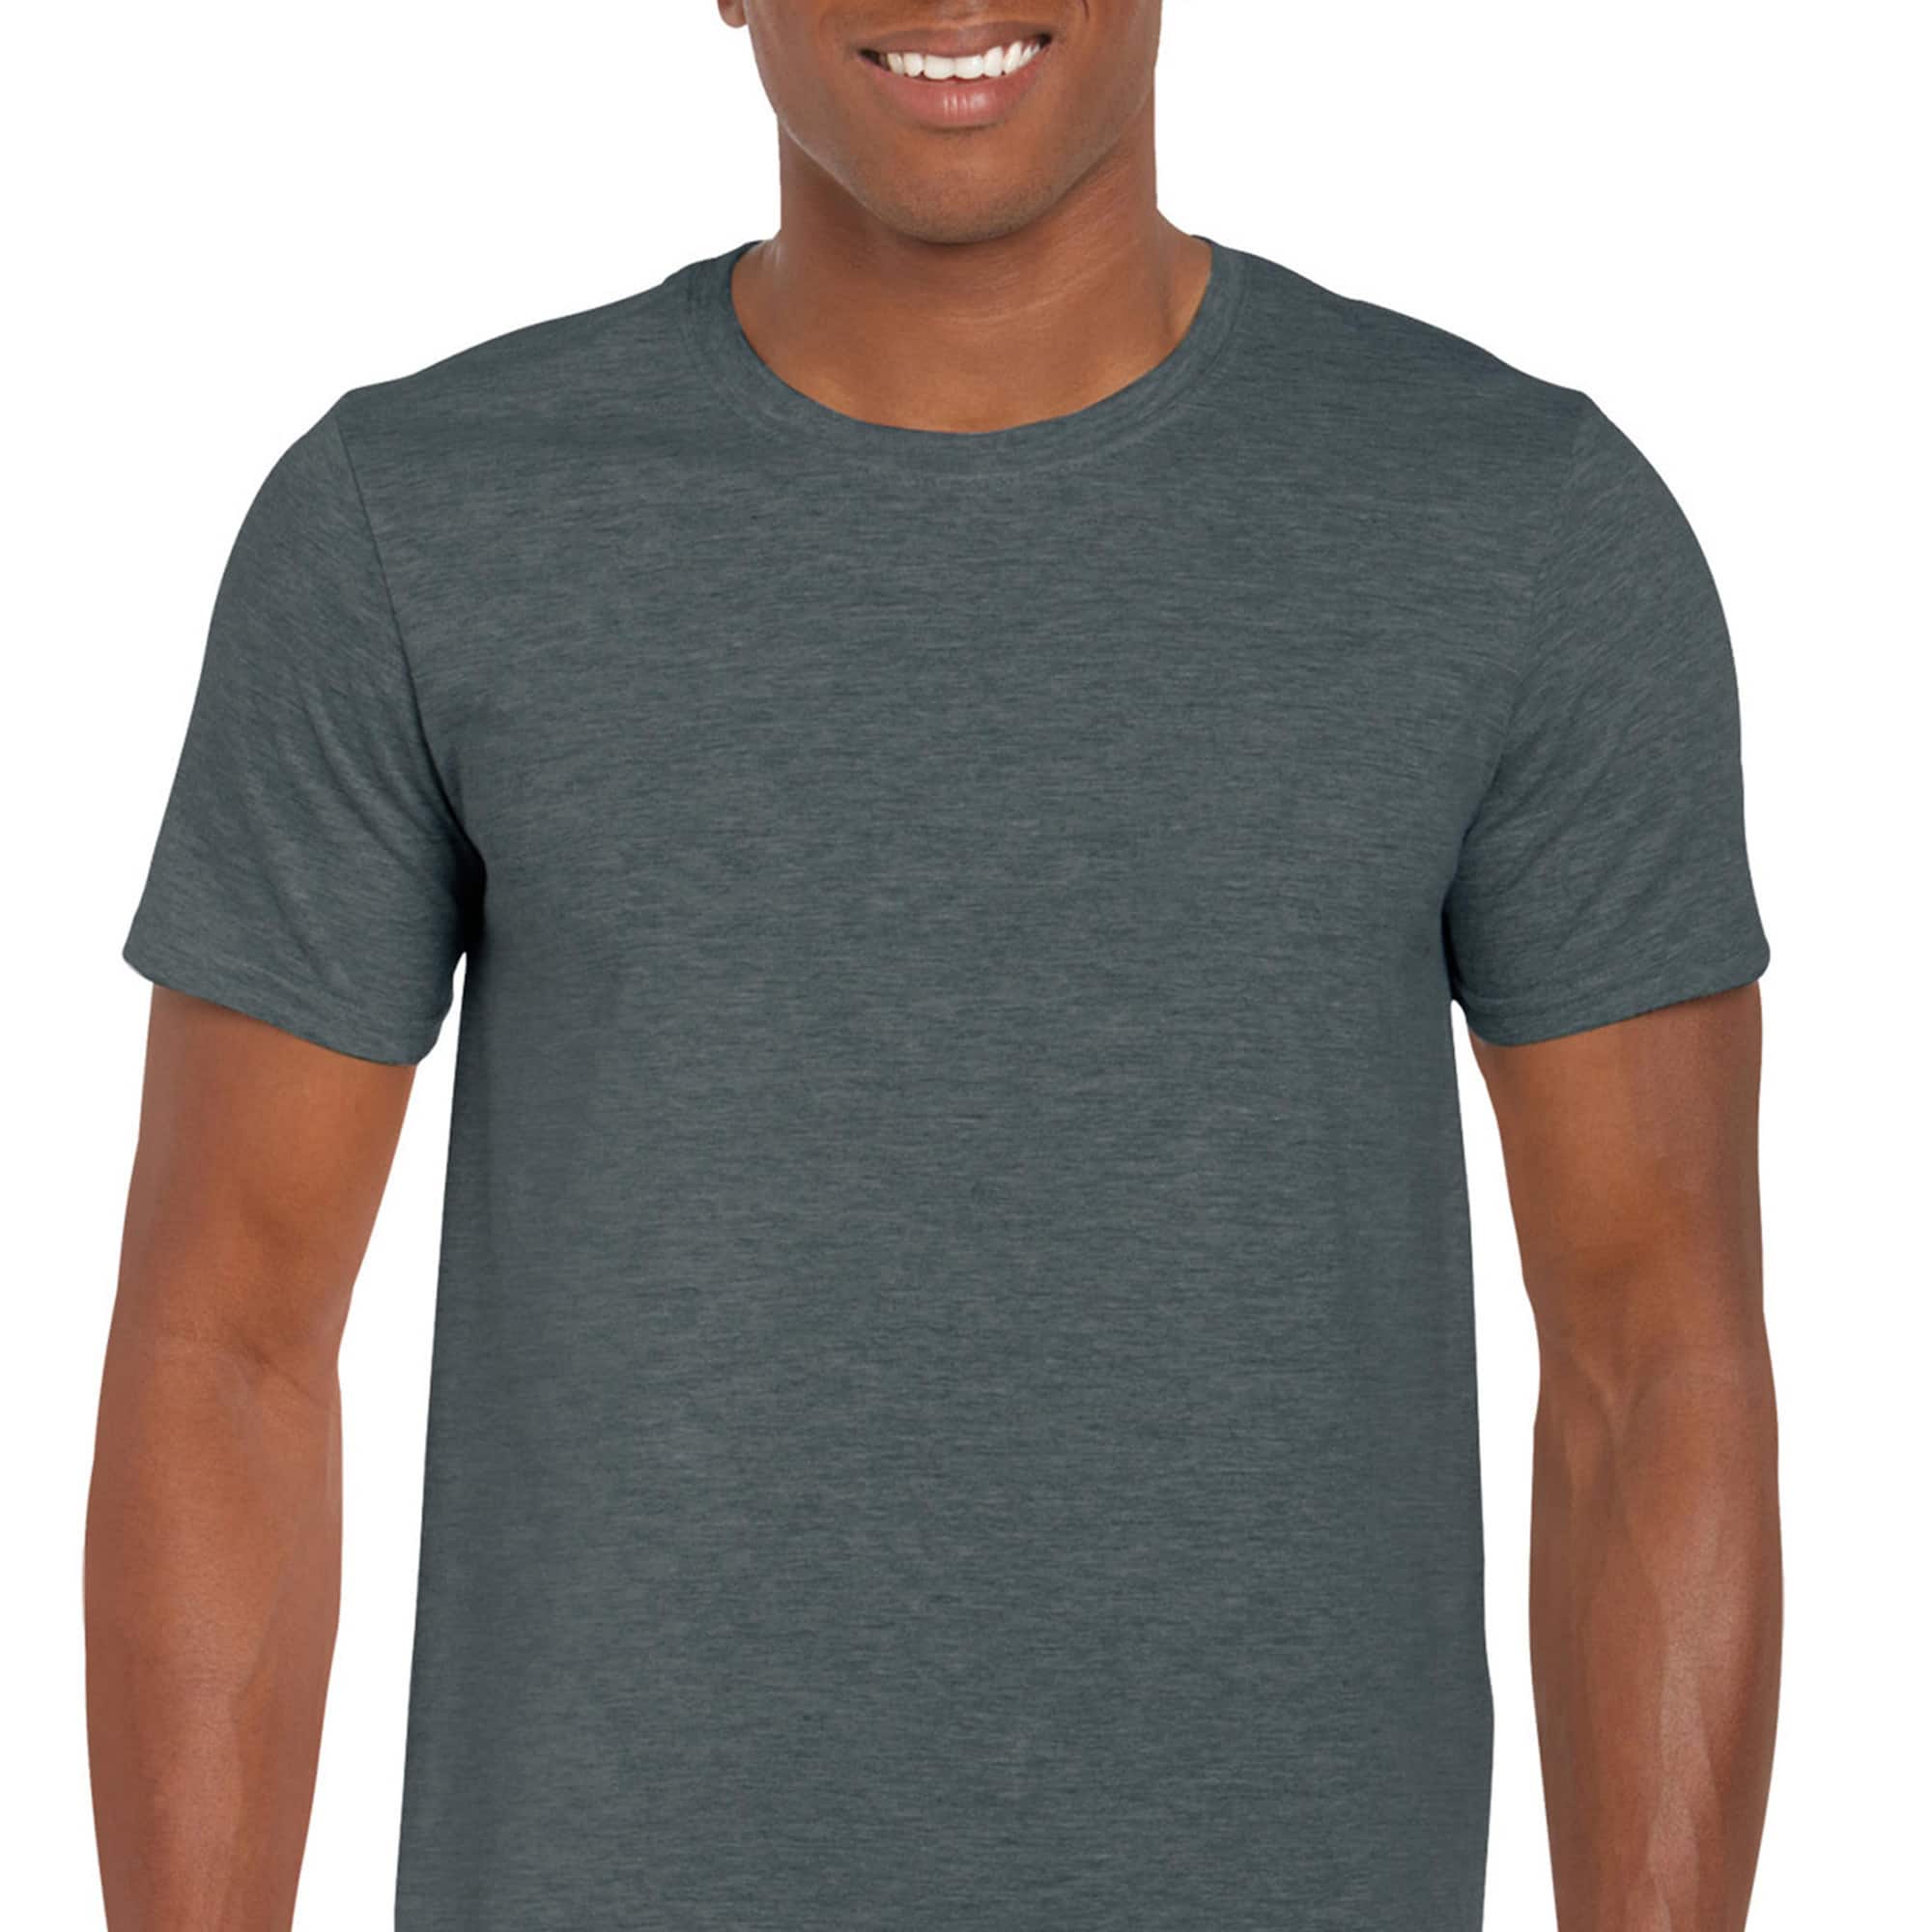 HIIT seamless scoop neck T-shirt in gray heather